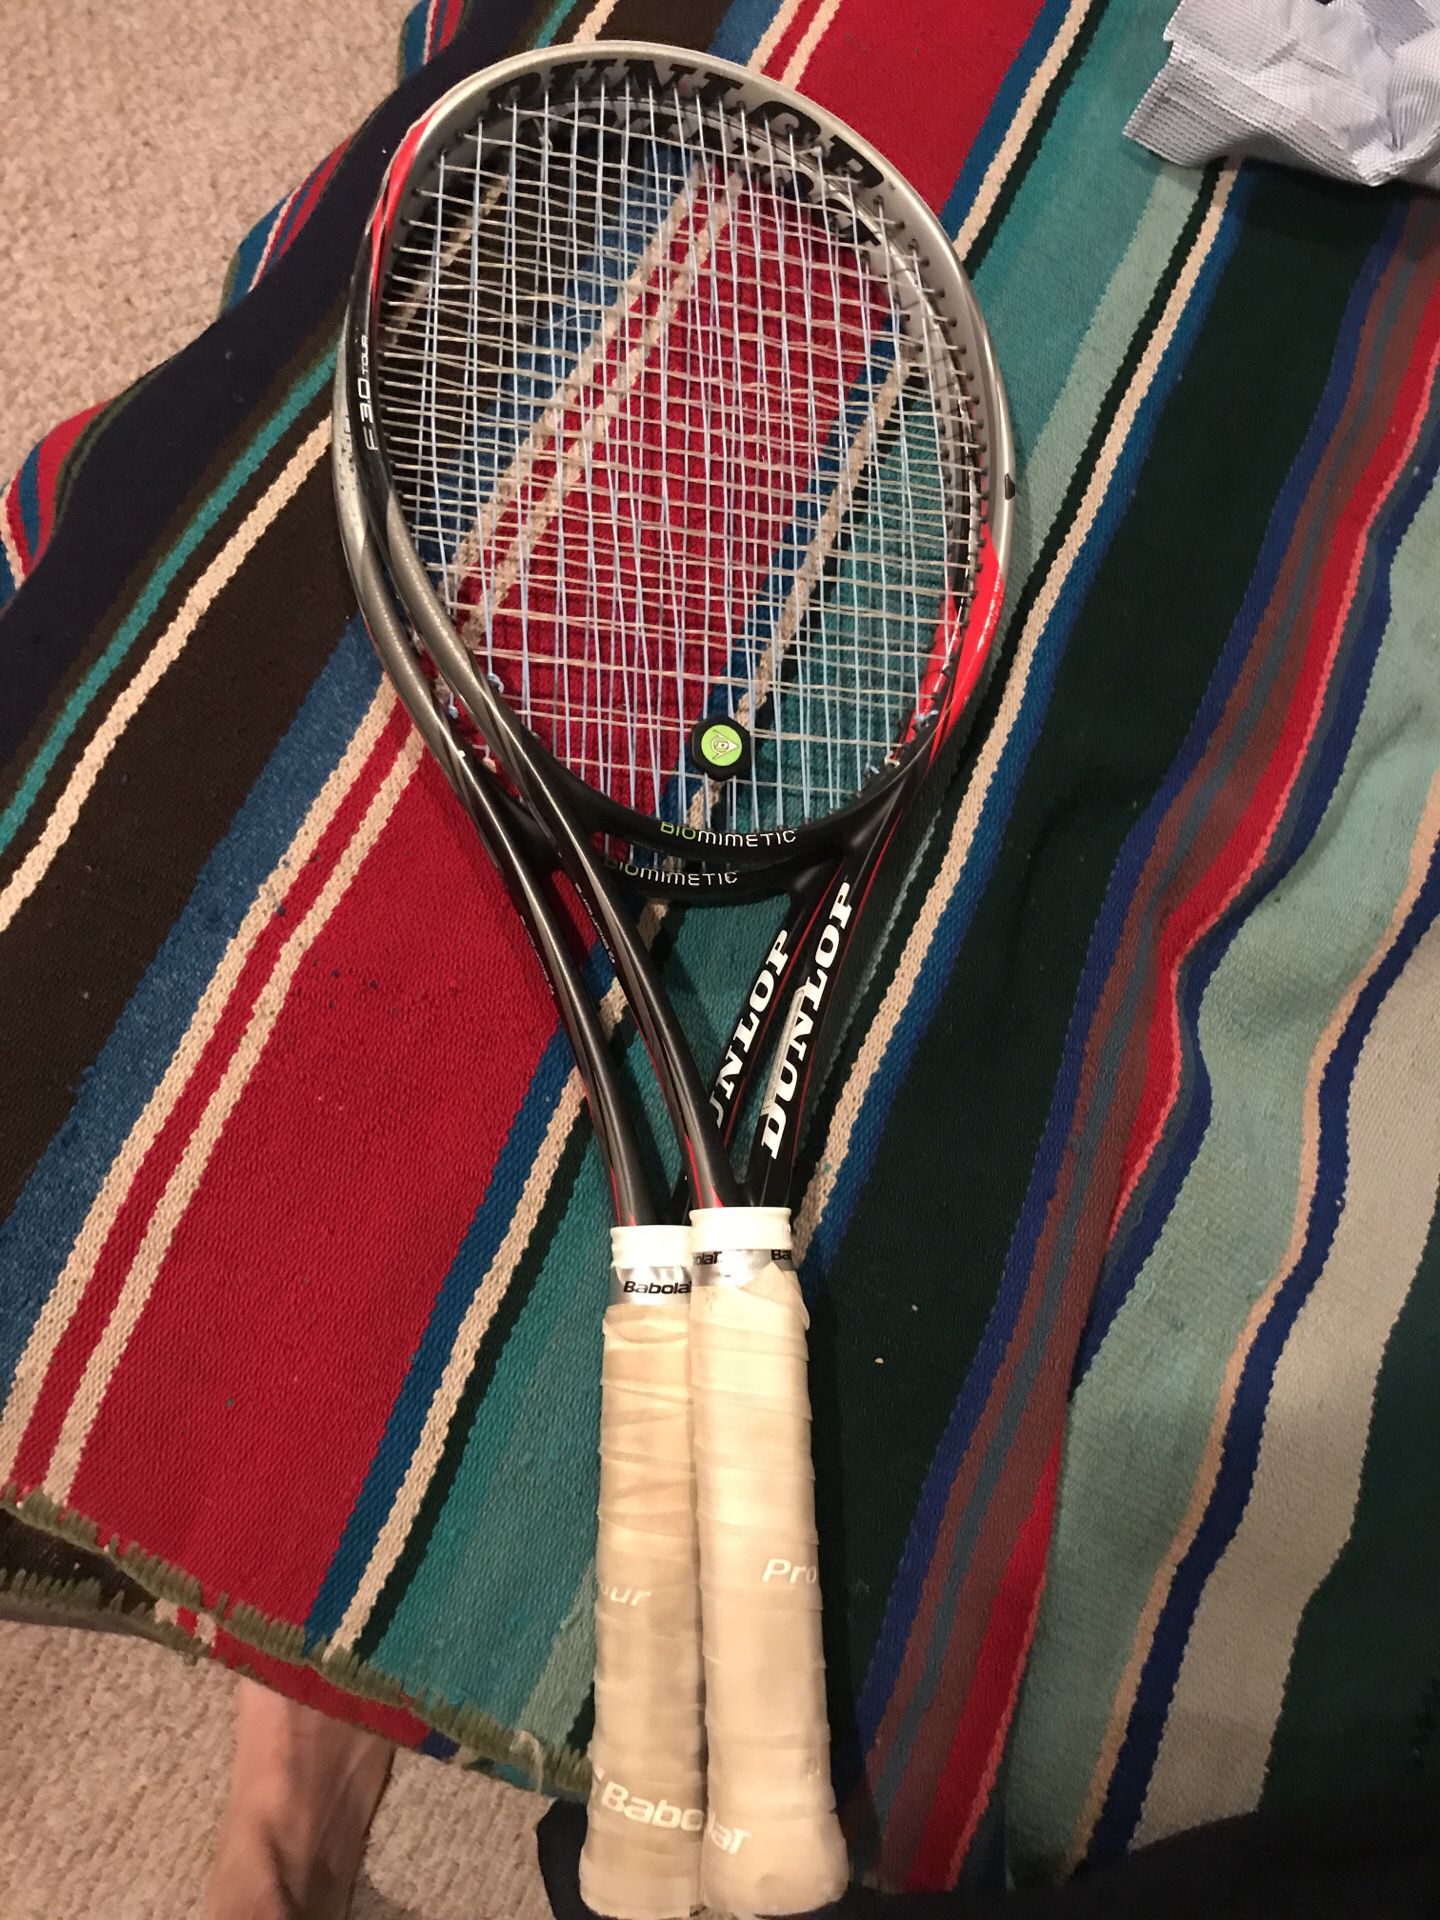 Two Dunlop Tennis Racquets